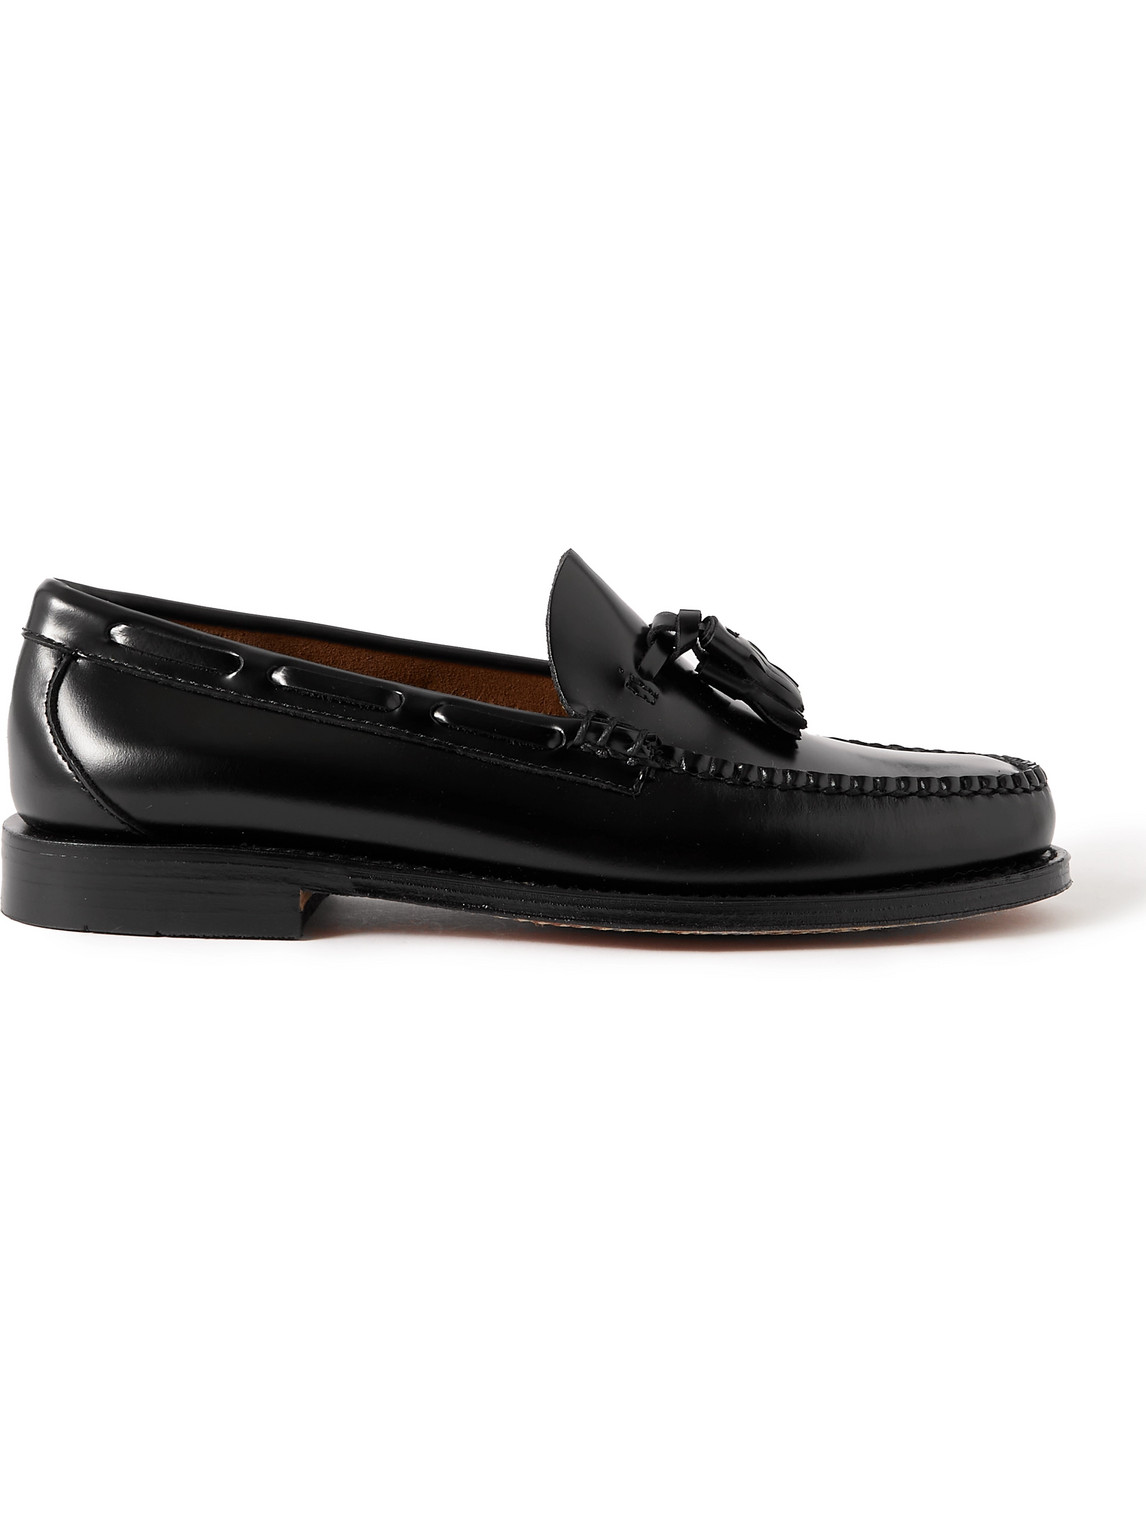 G.H. Bass & Co. - Weejuns Heritage Larkin Glossed-Leather Tasselled Loafers - Men - Black - UK 12 von G.H. Bass & Co.